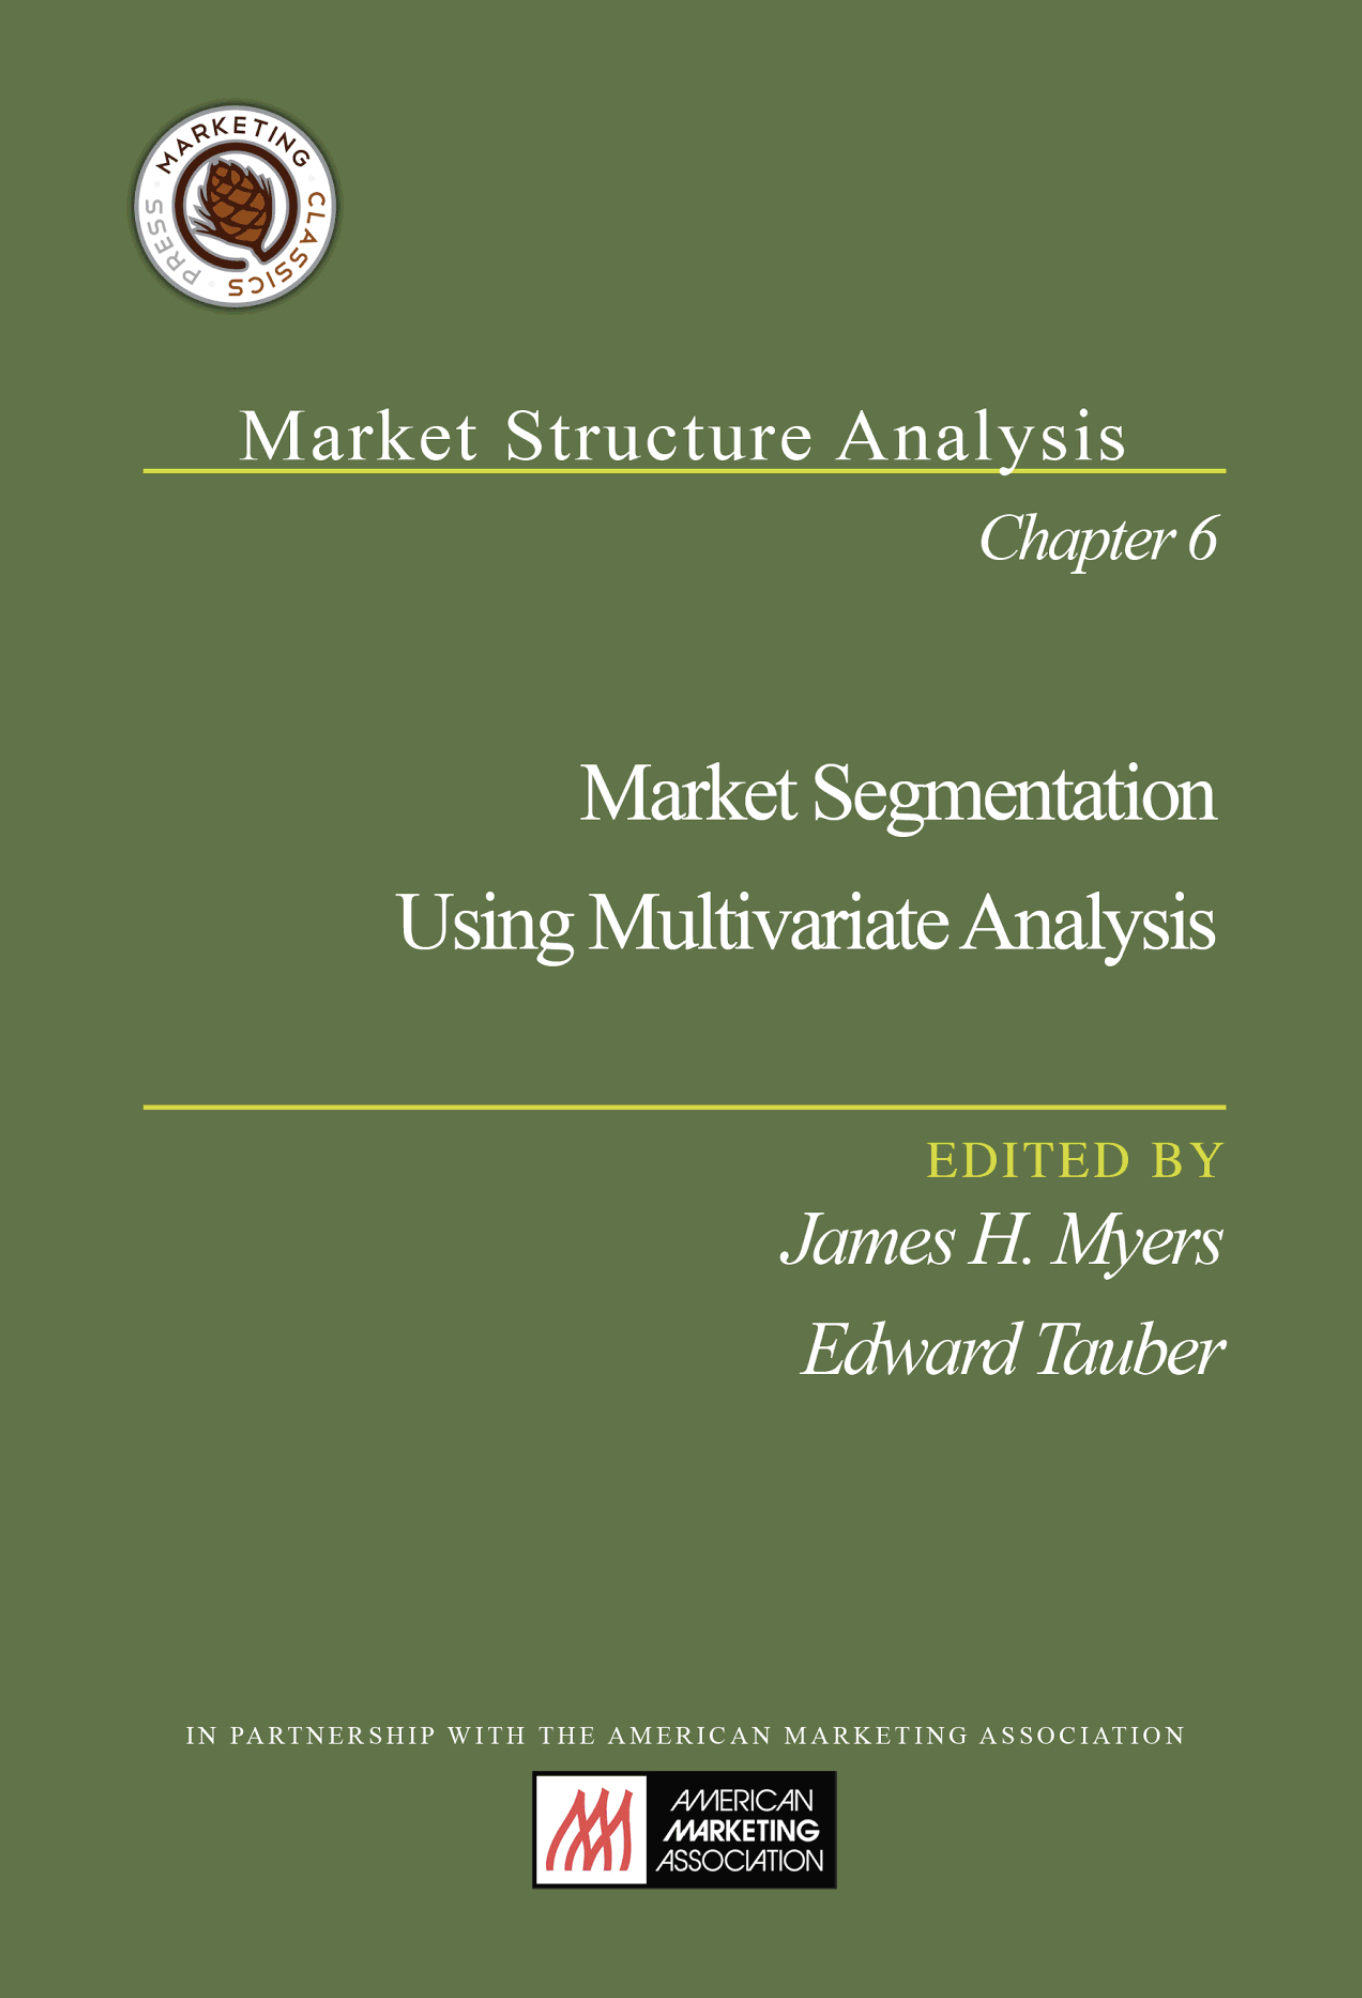 Market Segmentation Using Multivariate Analysis